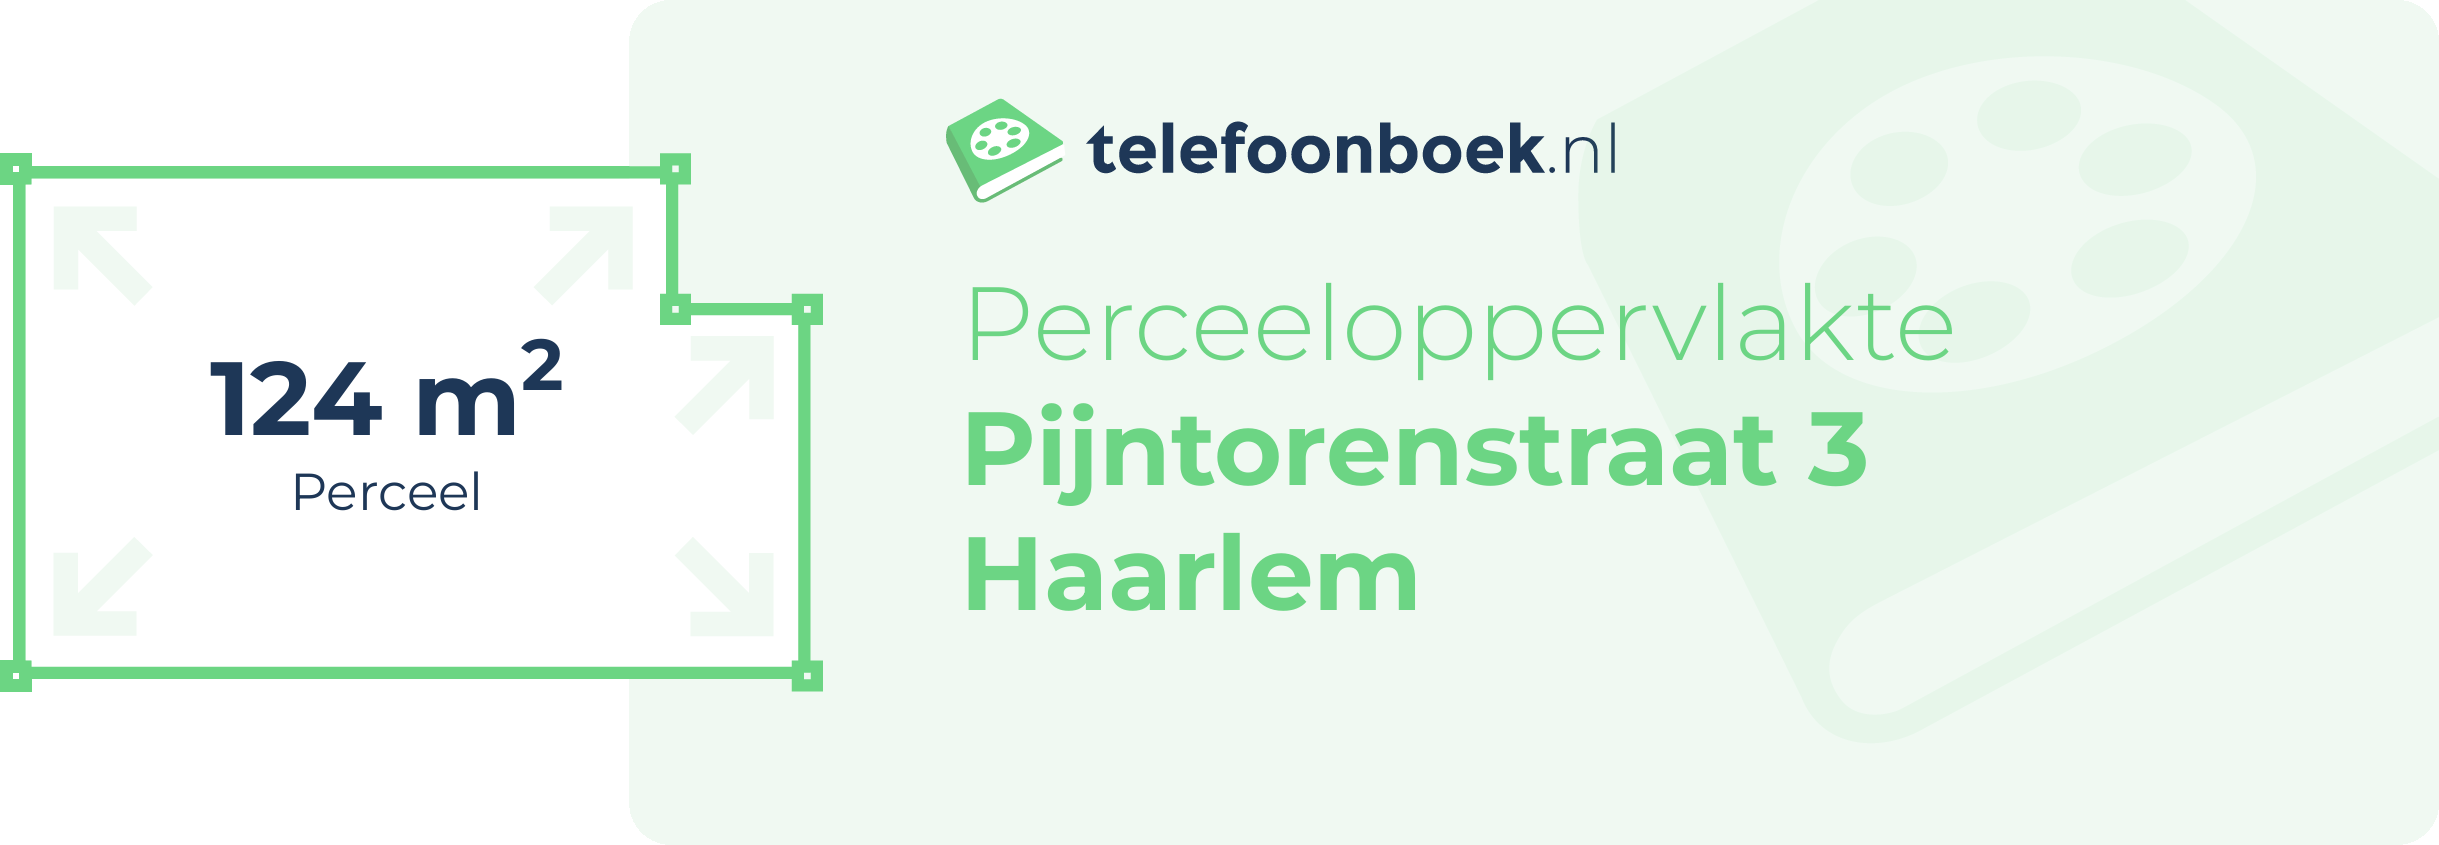 Perceeloppervlakte Pijntorenstraat 3 Haarlem